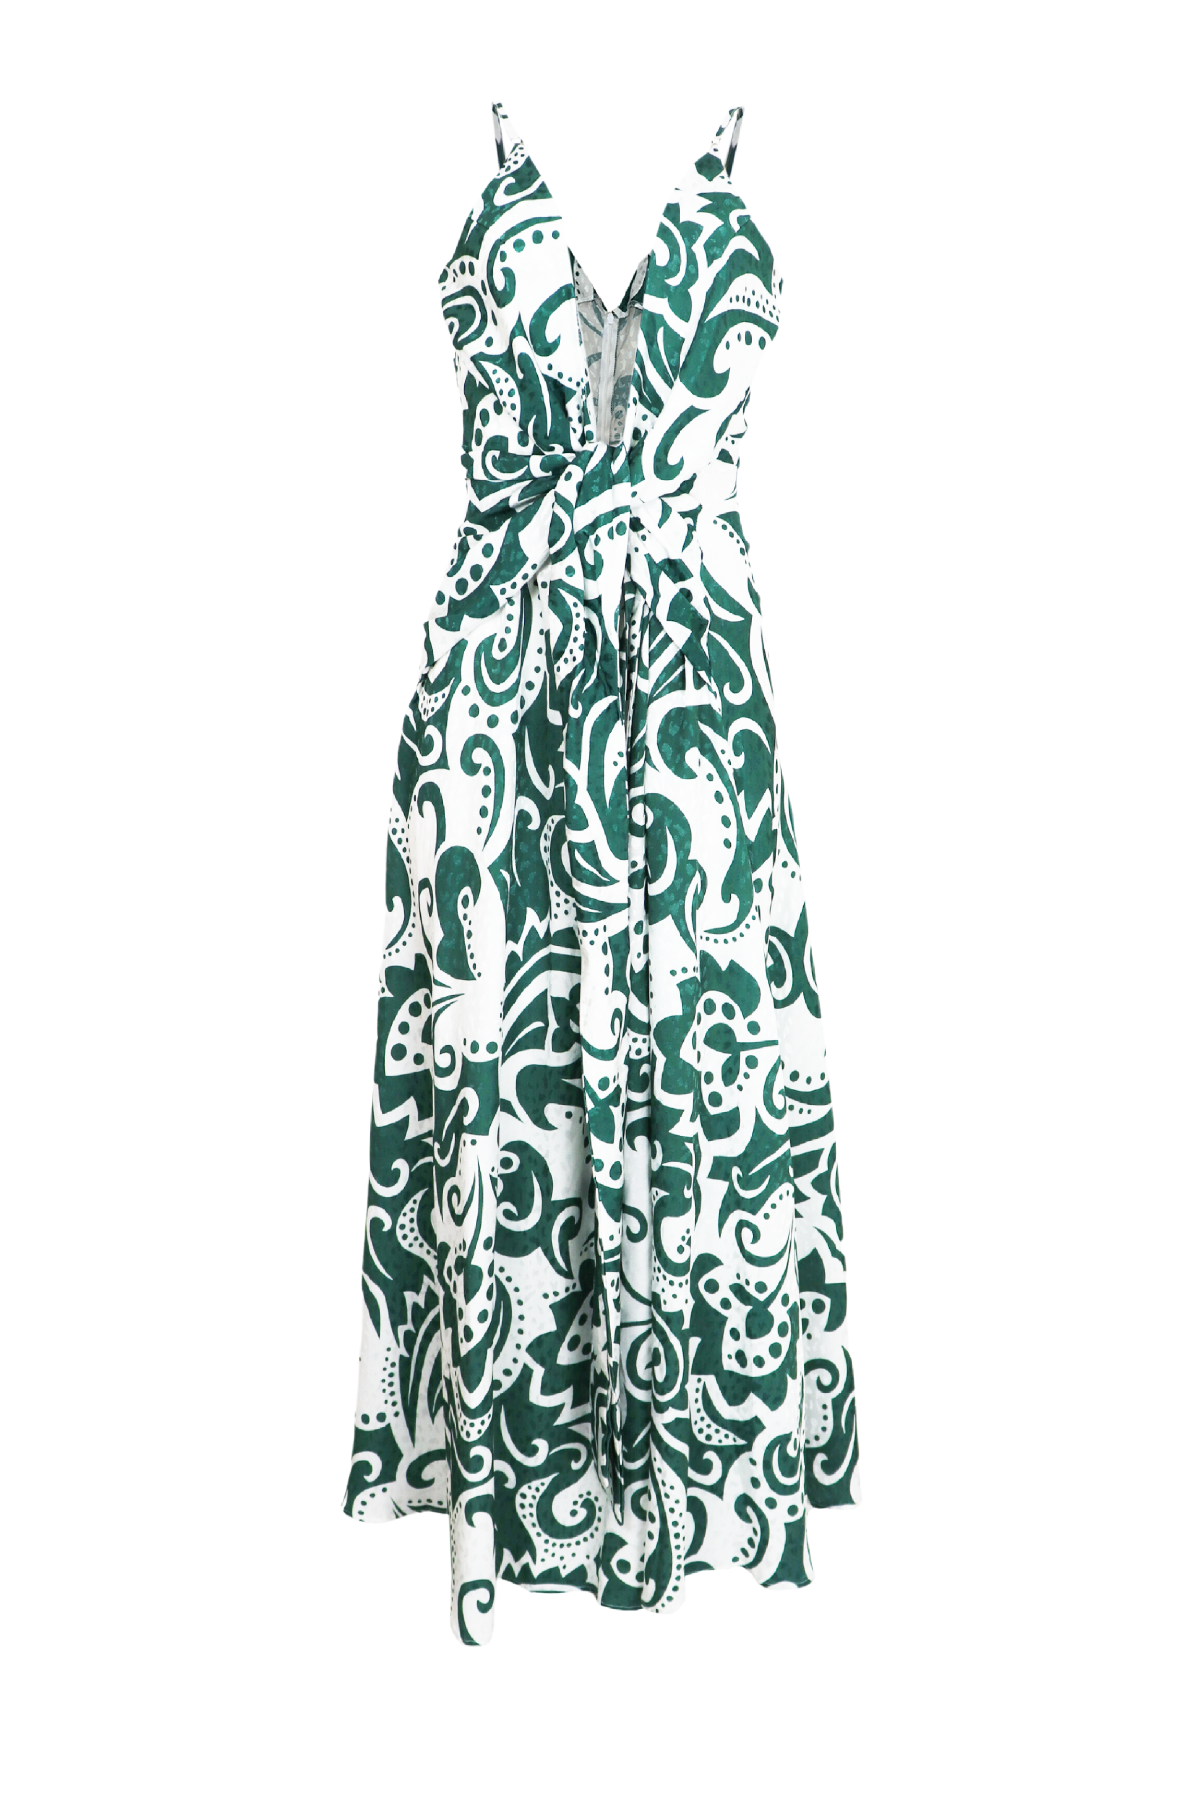 Hermoso vestido con escote profundo jade